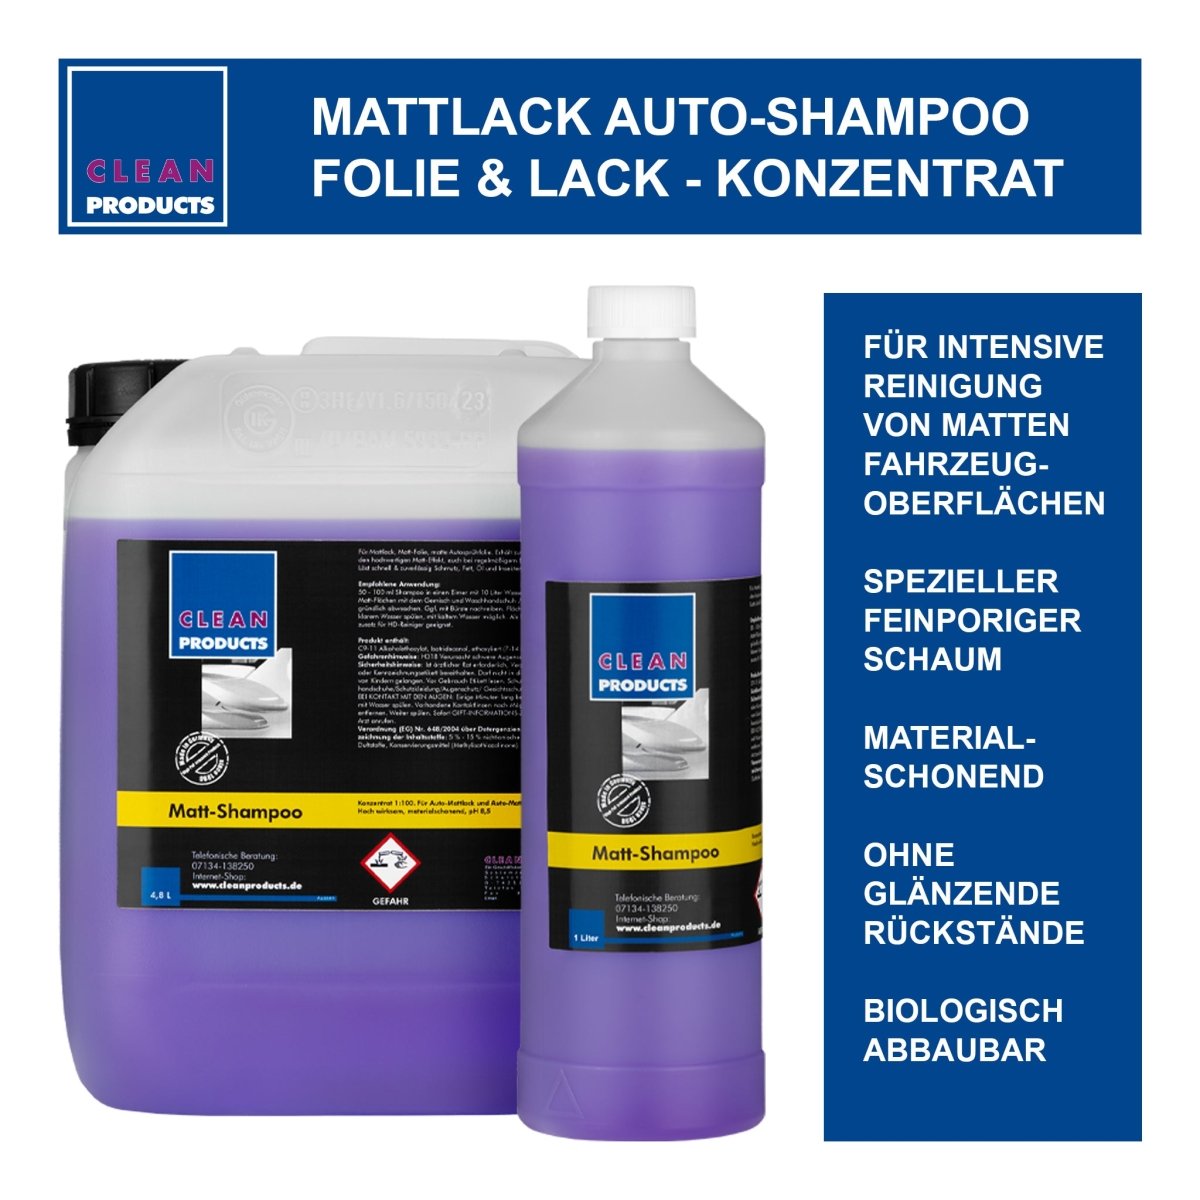 Mattlack Auto-Shampoo Folie & Lack - Konzentrat - 4,8 Liter - CLEANPRODUCTS